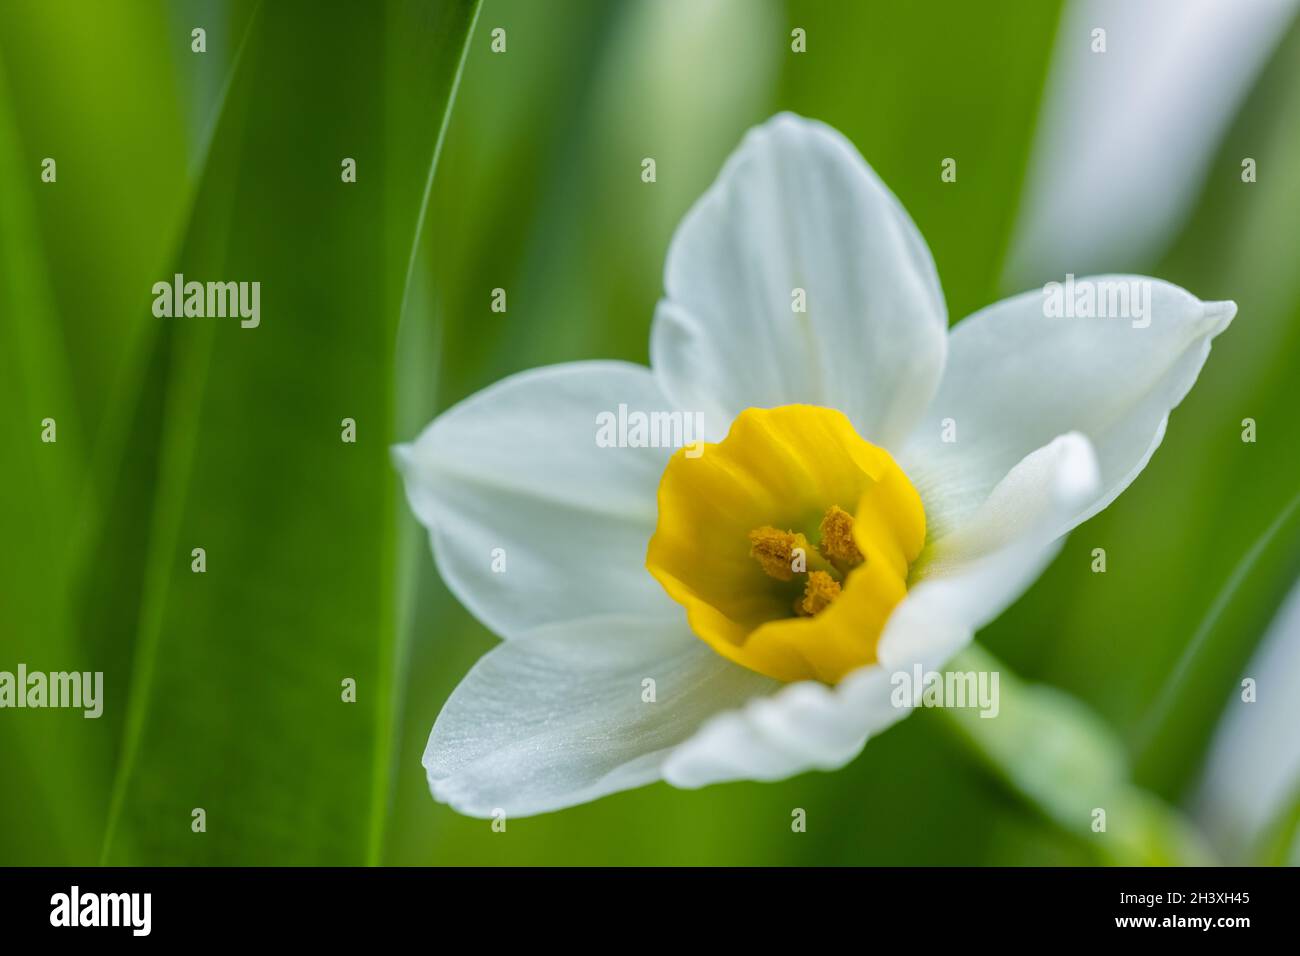 Narcisse (daffodils) fleurissent en gros plan Banque D'Images